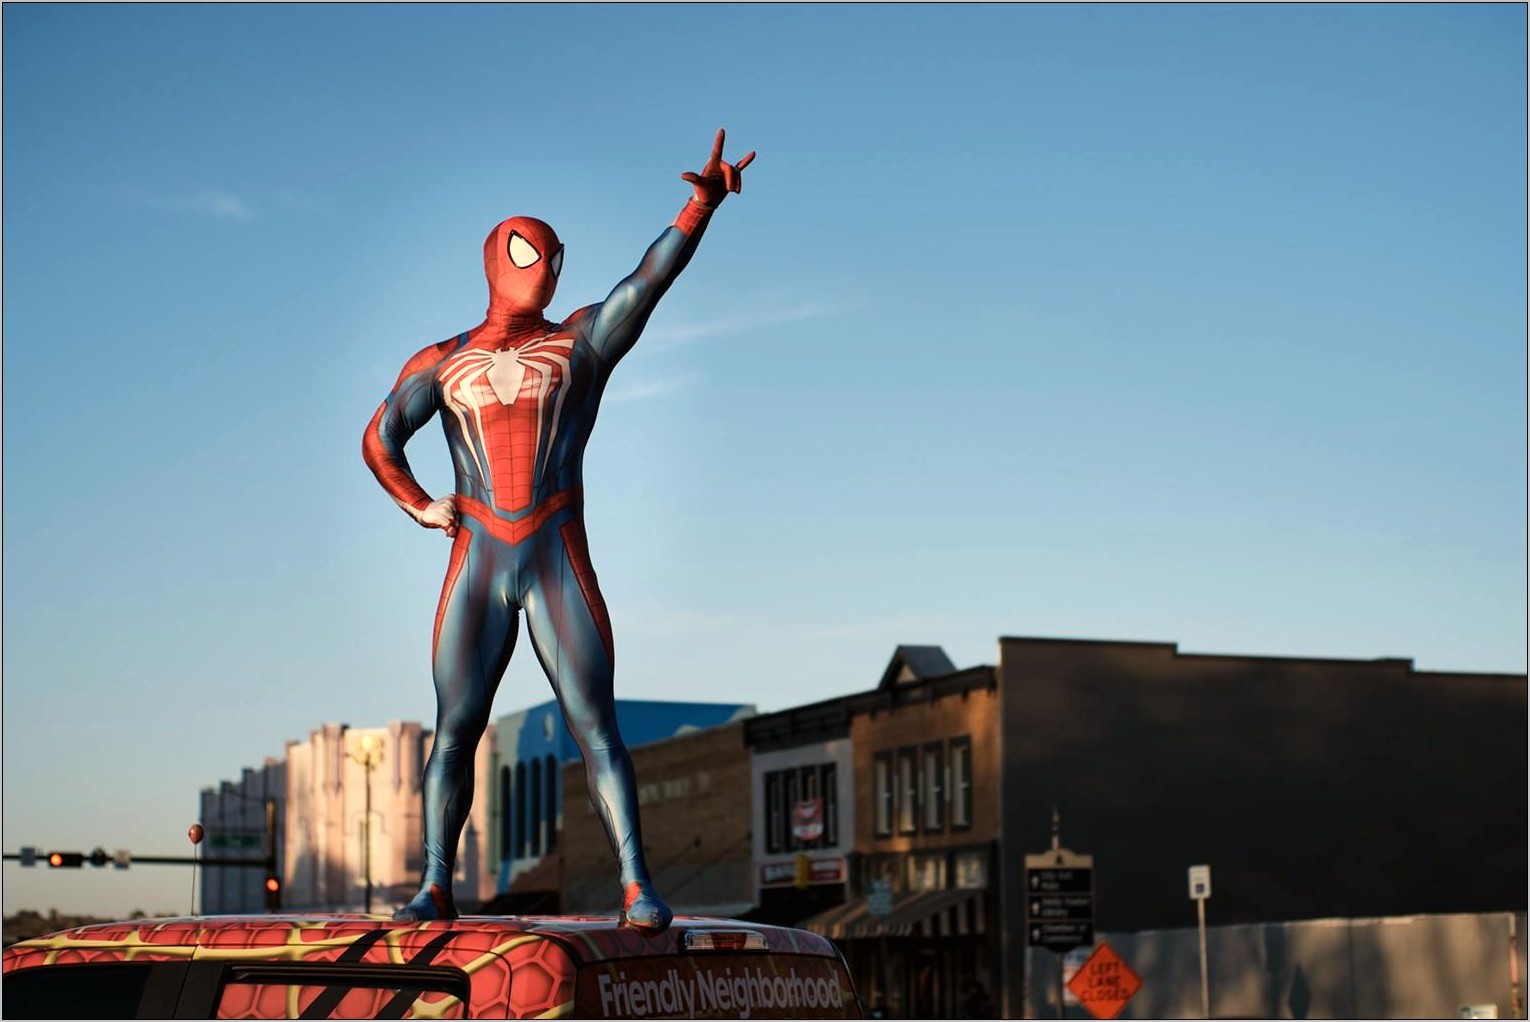 Spider Man Resume Work With Fire Service